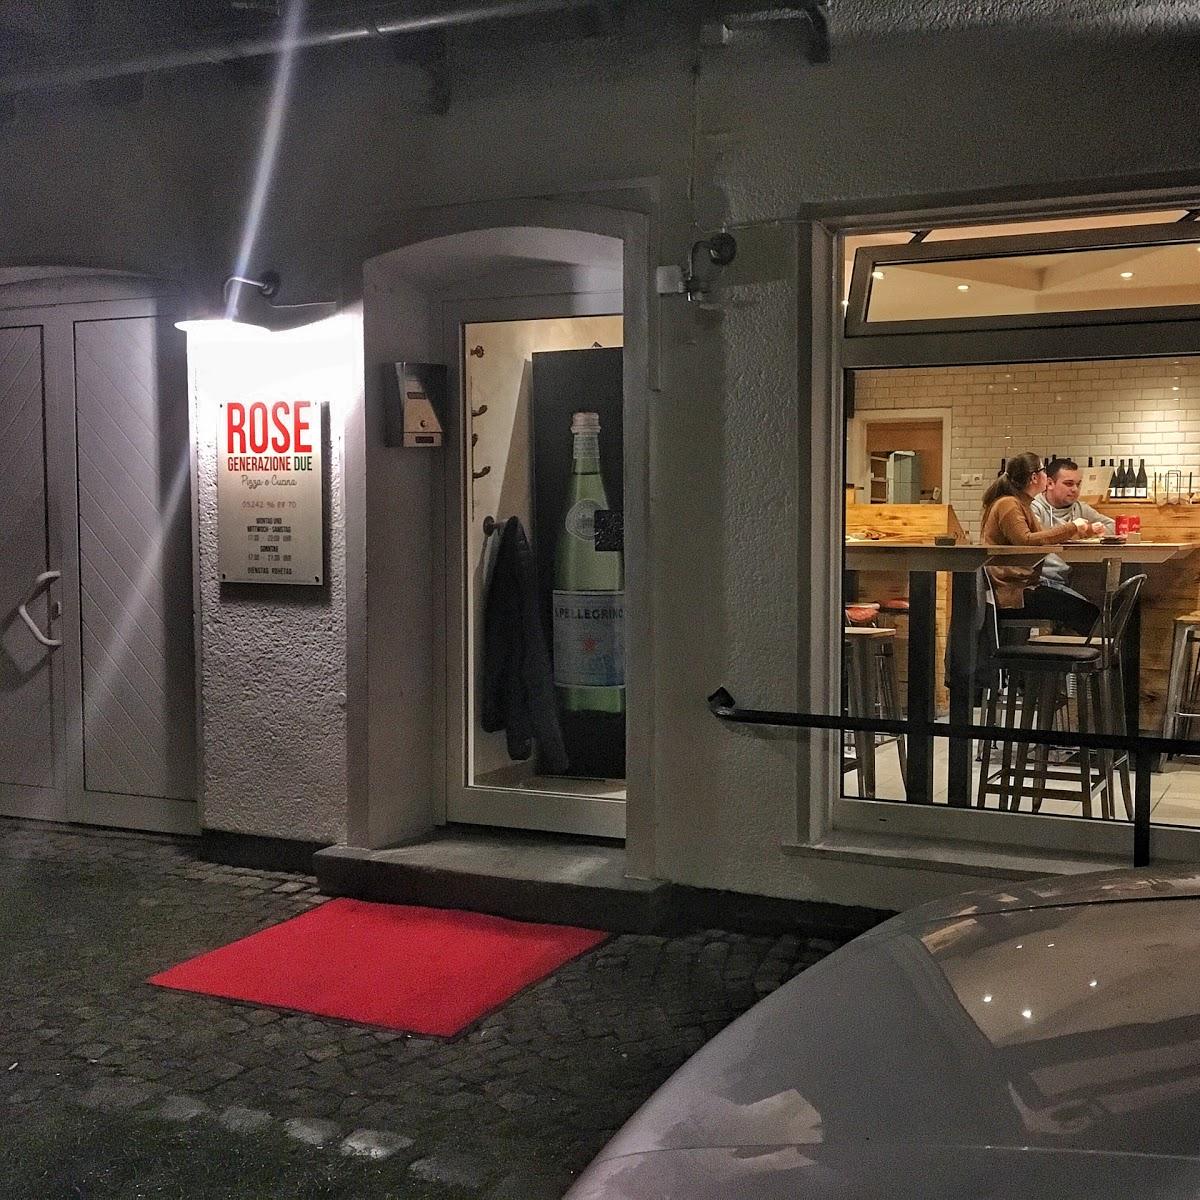 Restaurant "Pizzeria ROSE generazione due" in Rheda-Wiedenbrück